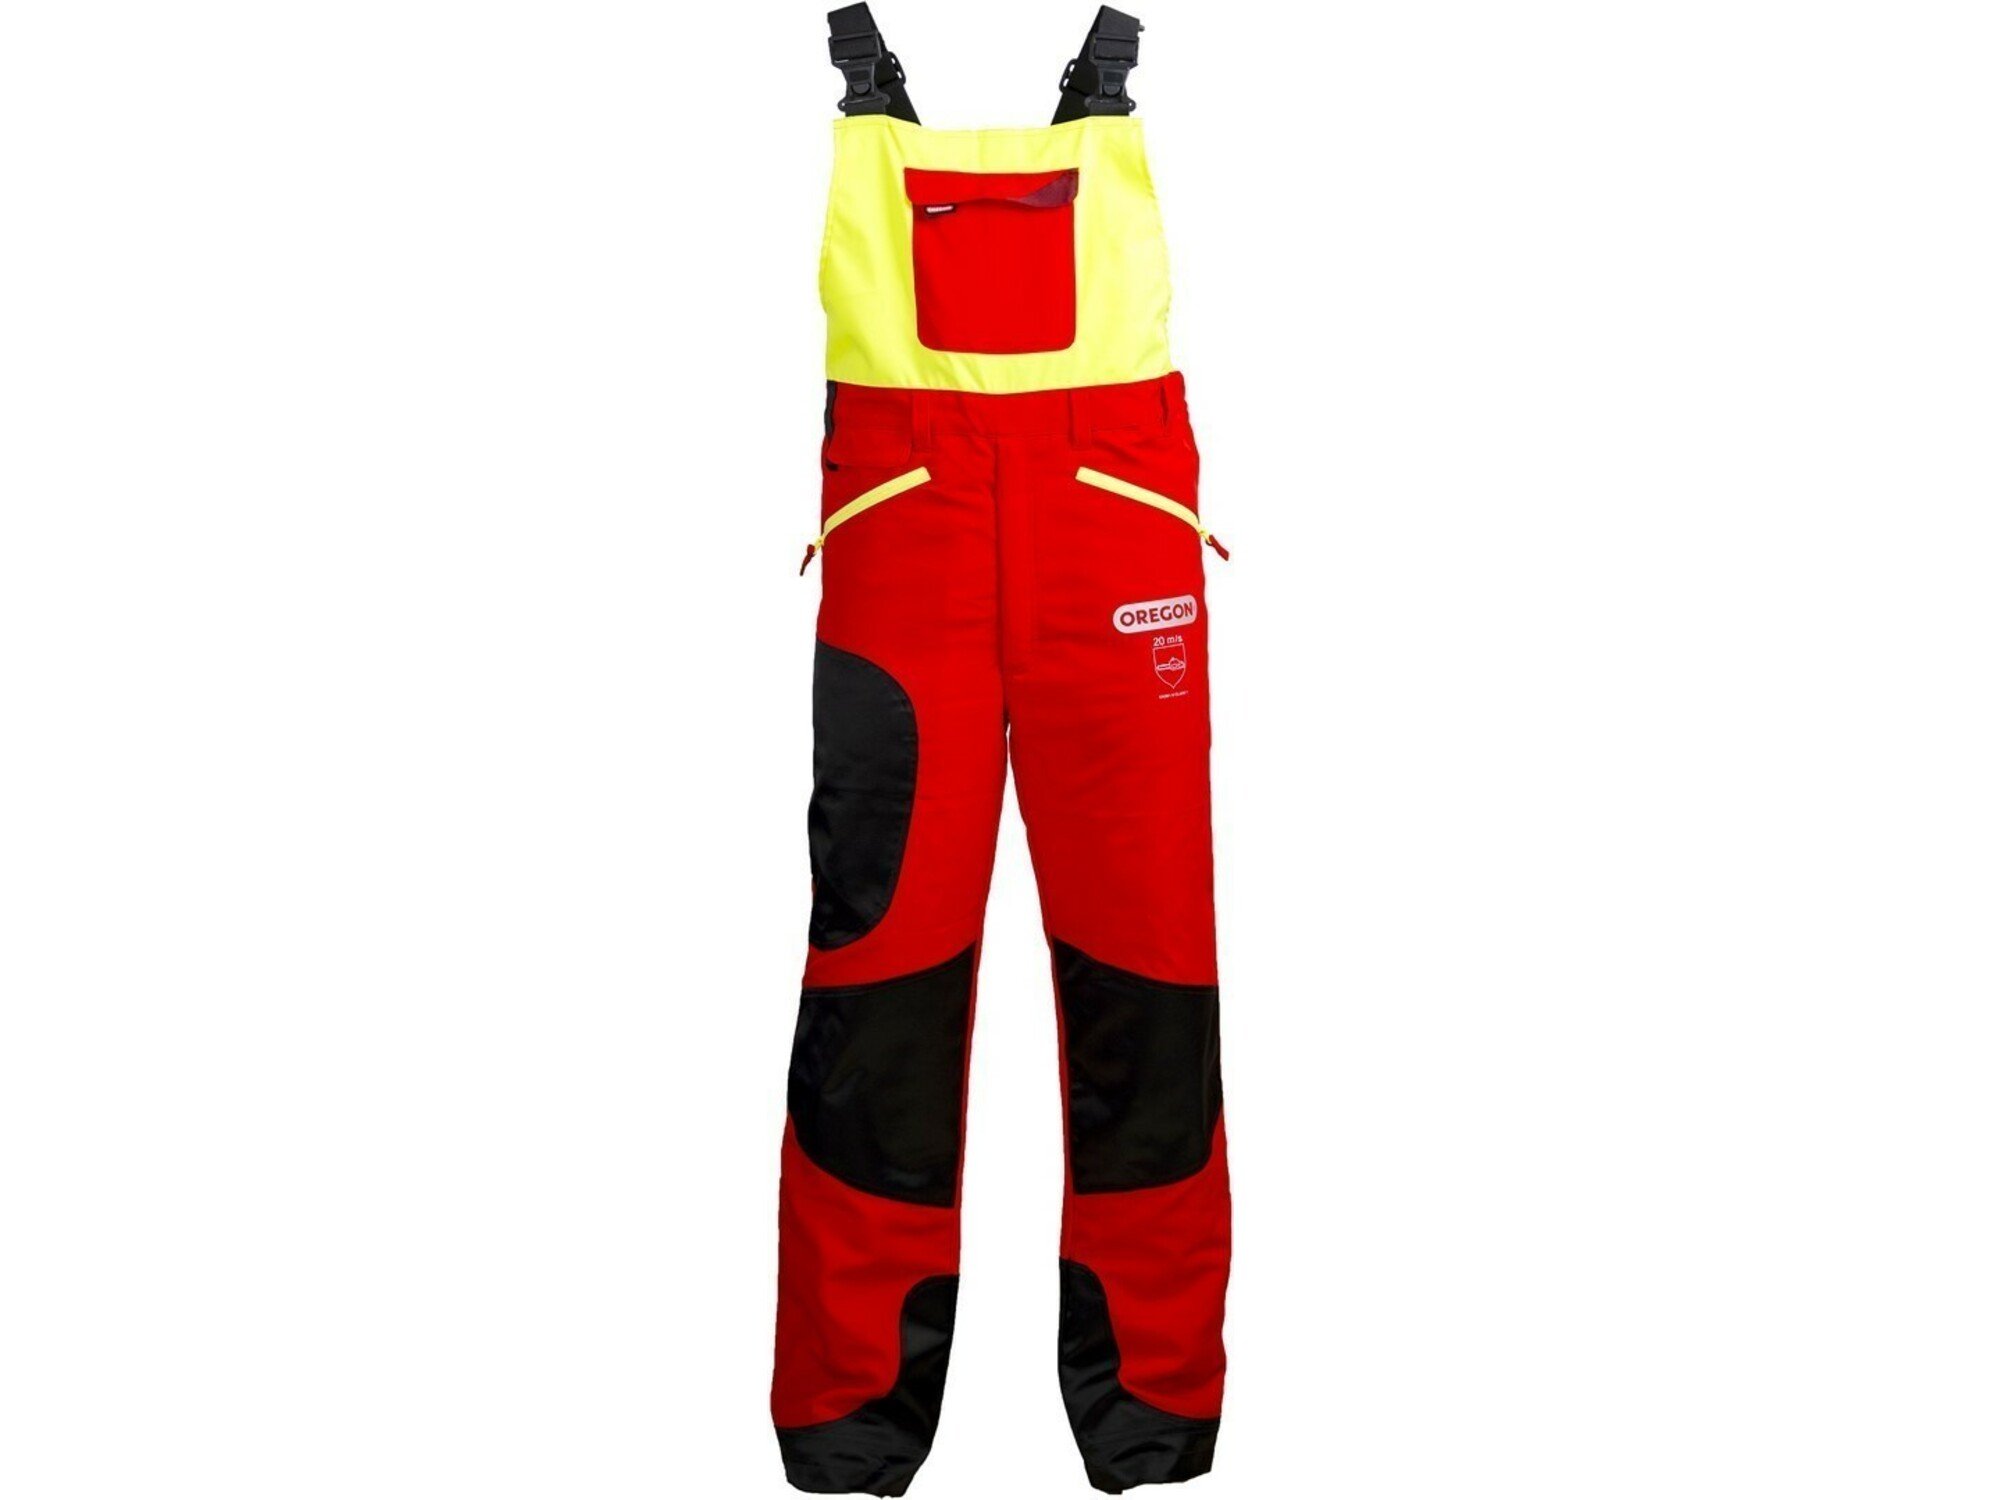 OREGON zaščitne hlače WAIPOUA Z NARAMNICAMI št.54/56(XL) OR 295470/XL